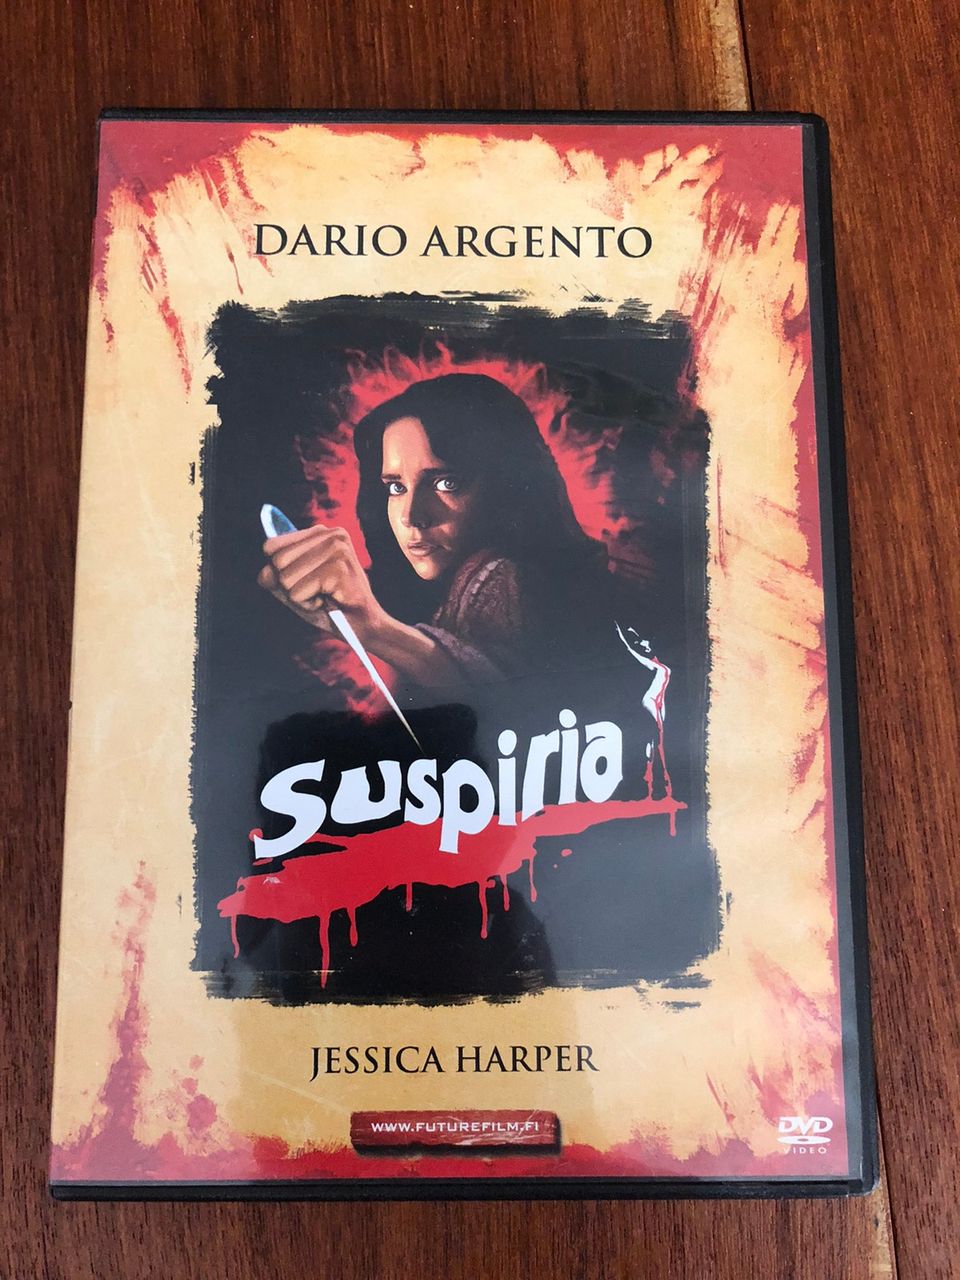 Dario Argento - Suspiria (1977) - DVD